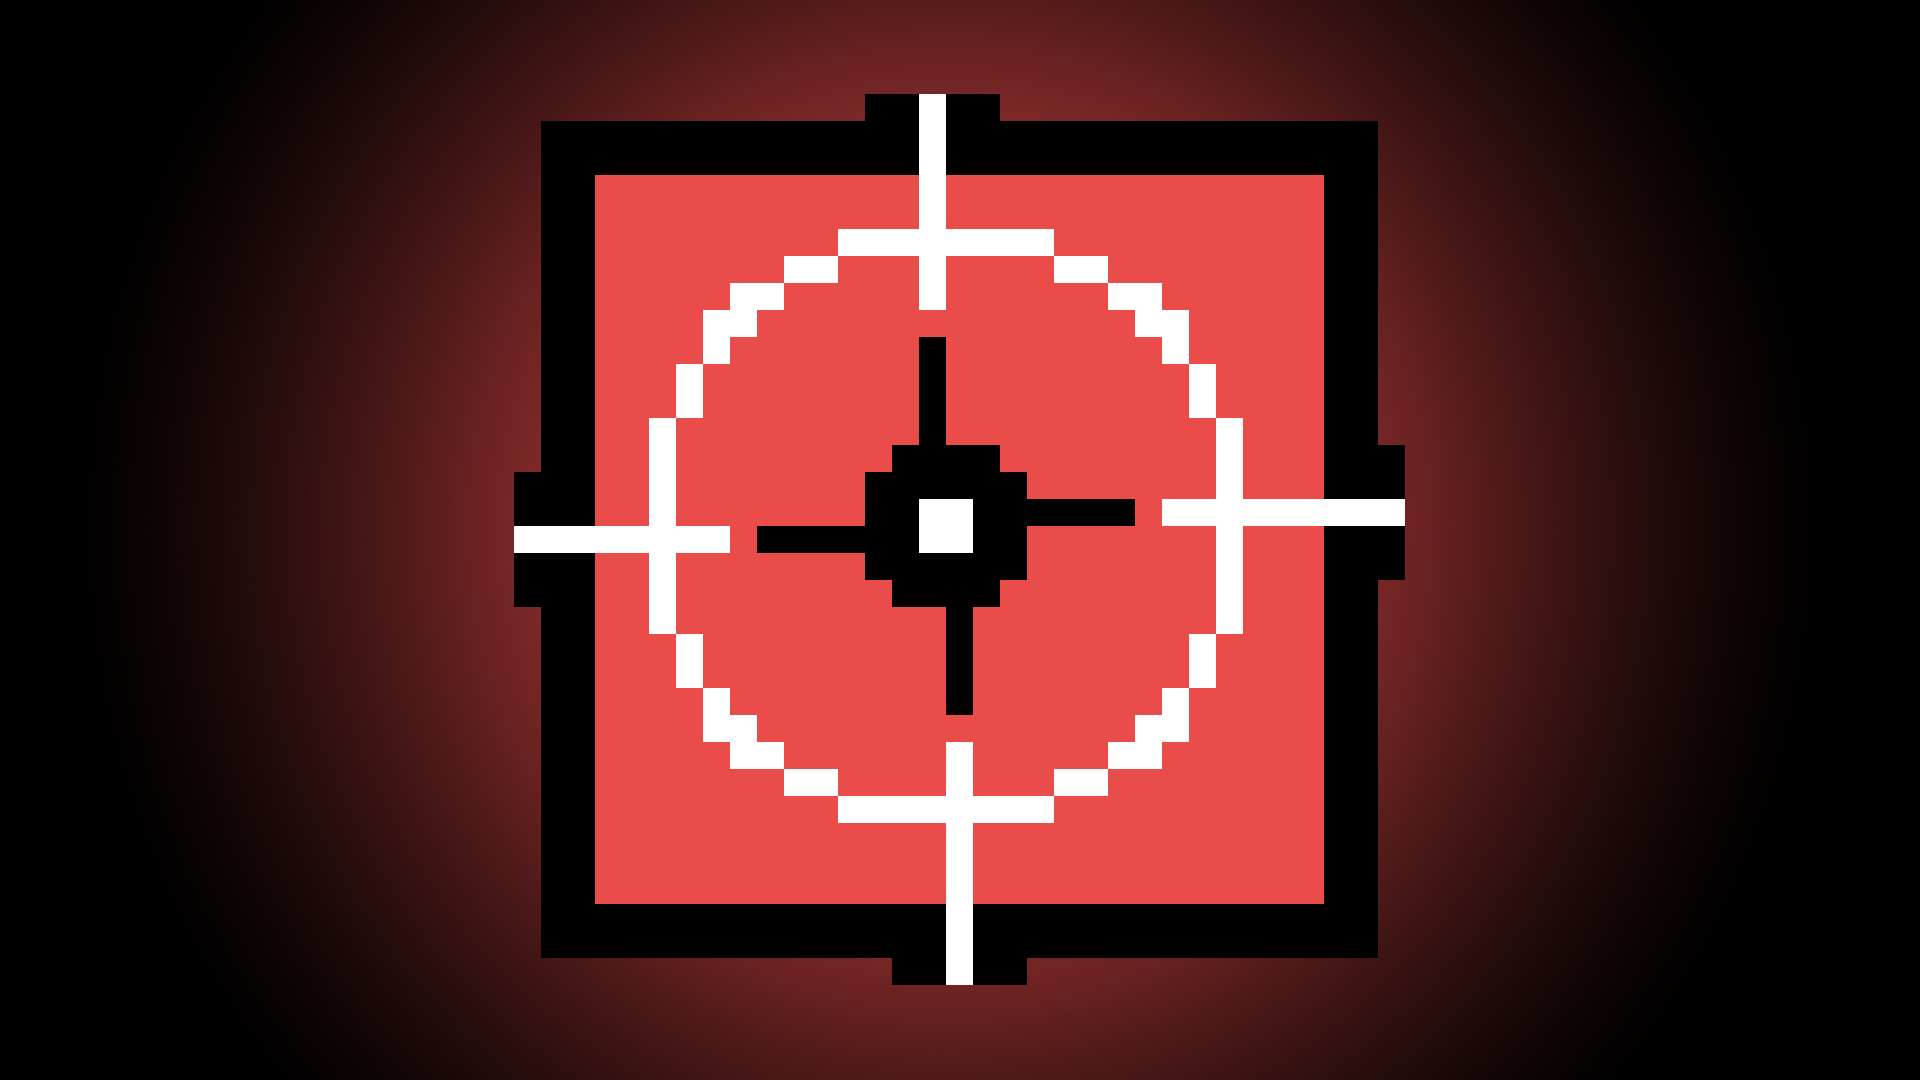 General 1920x1080 pixel art Rainbow Six: Siege minimalism icons pixelated red simple background digital art